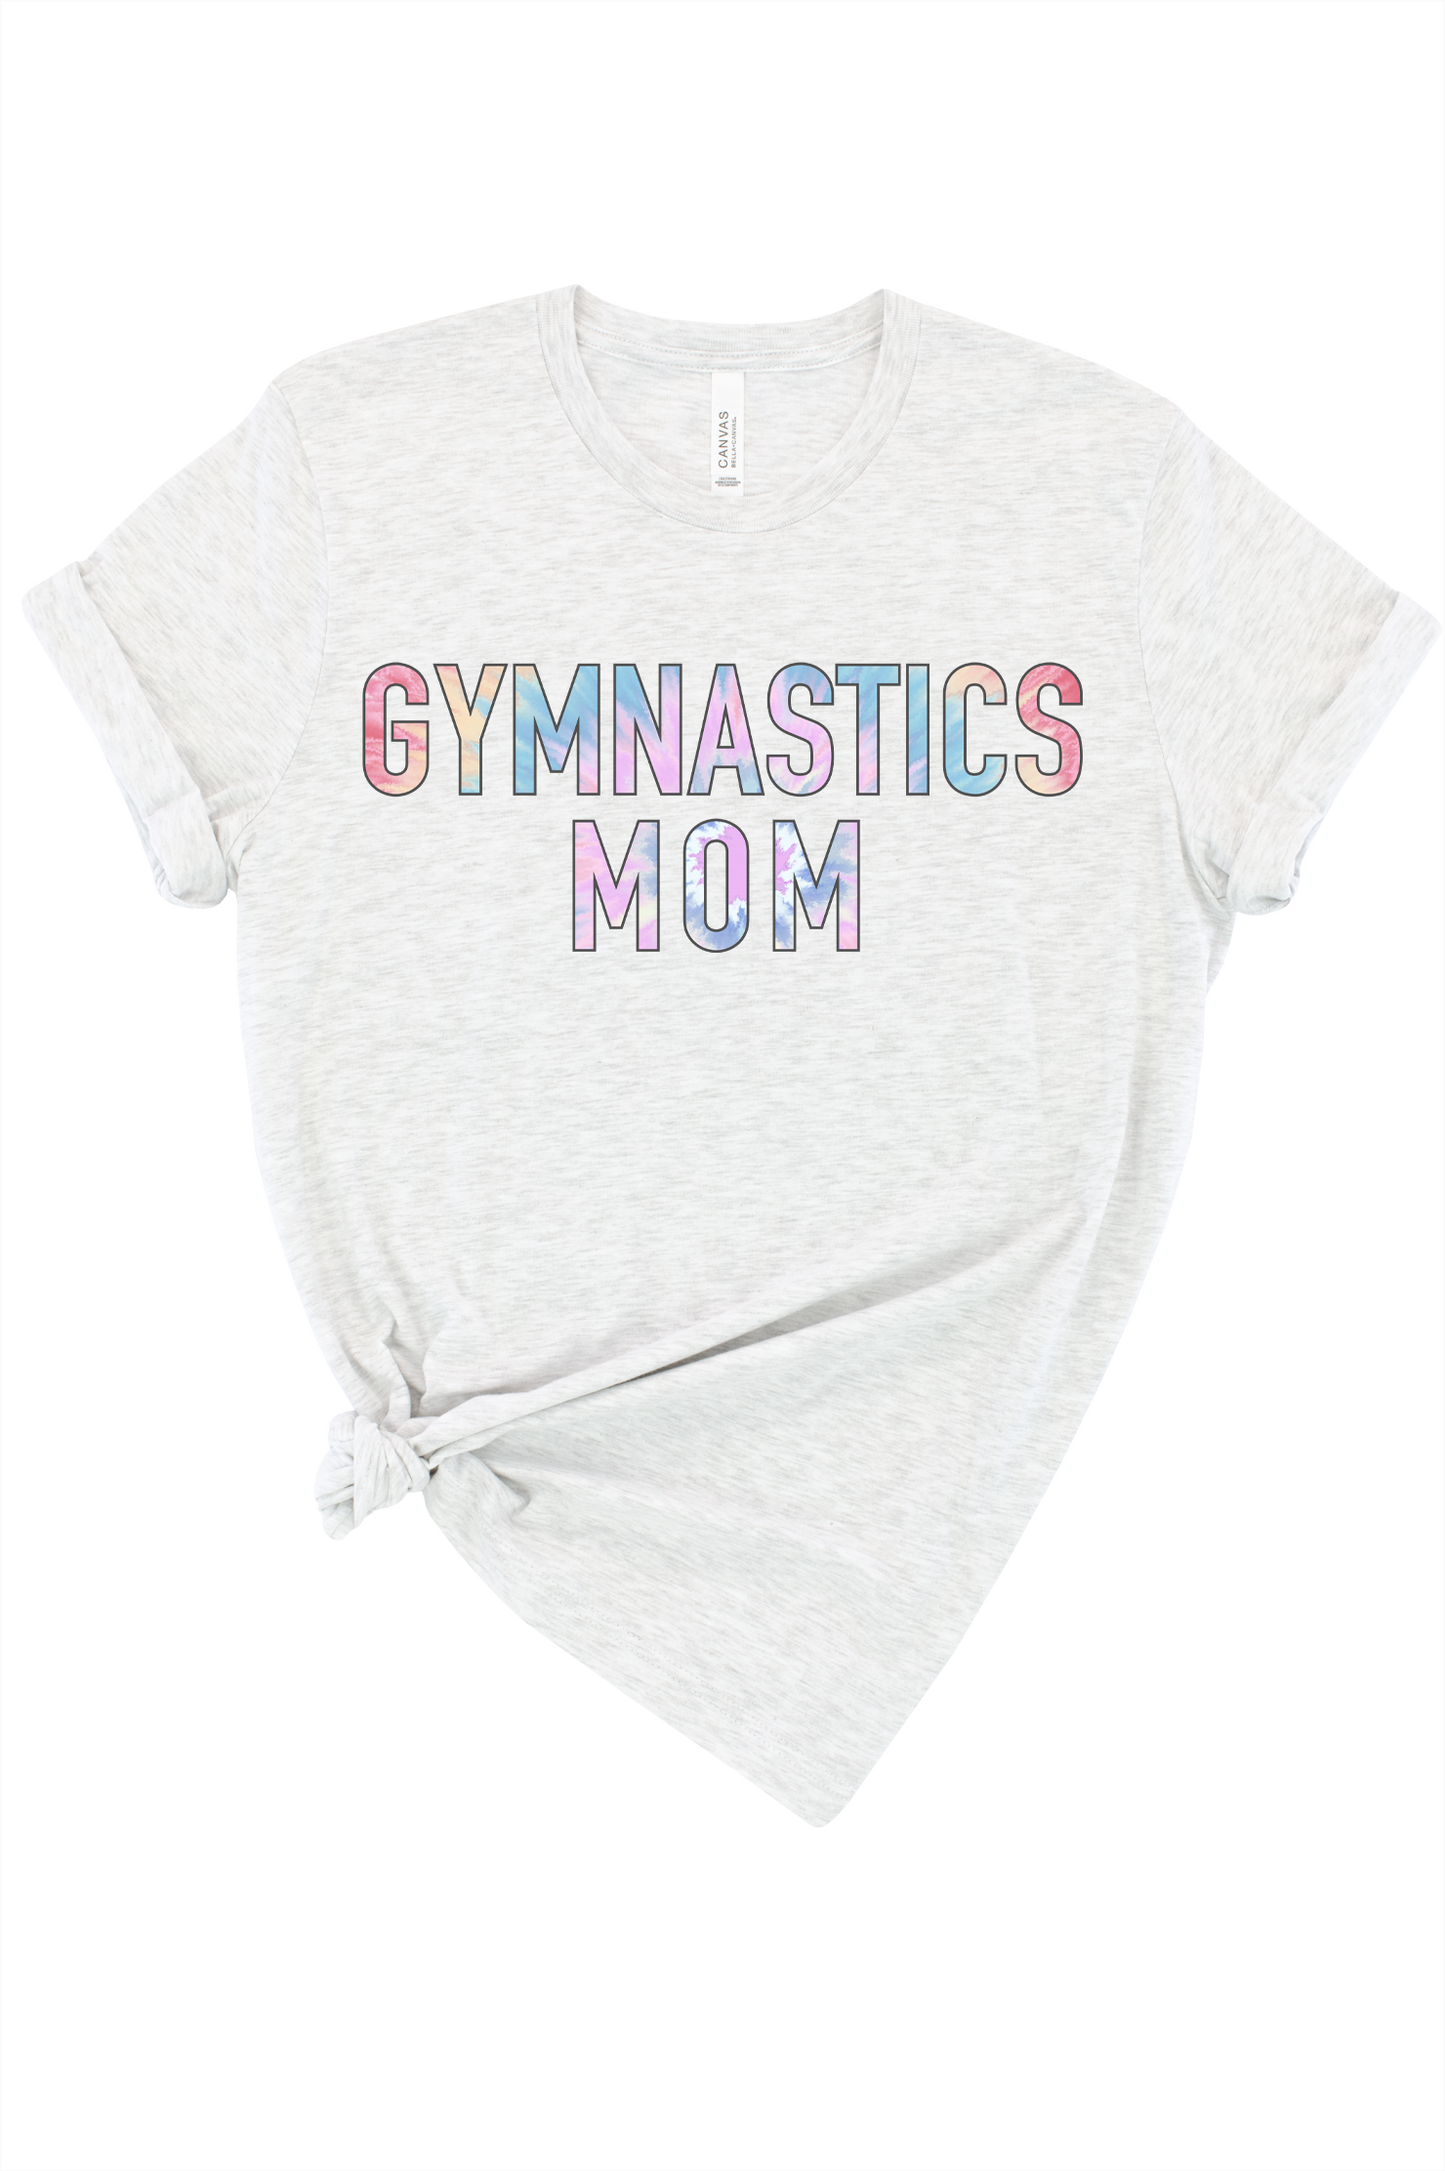 Gymnastics Mom Graphic Tee